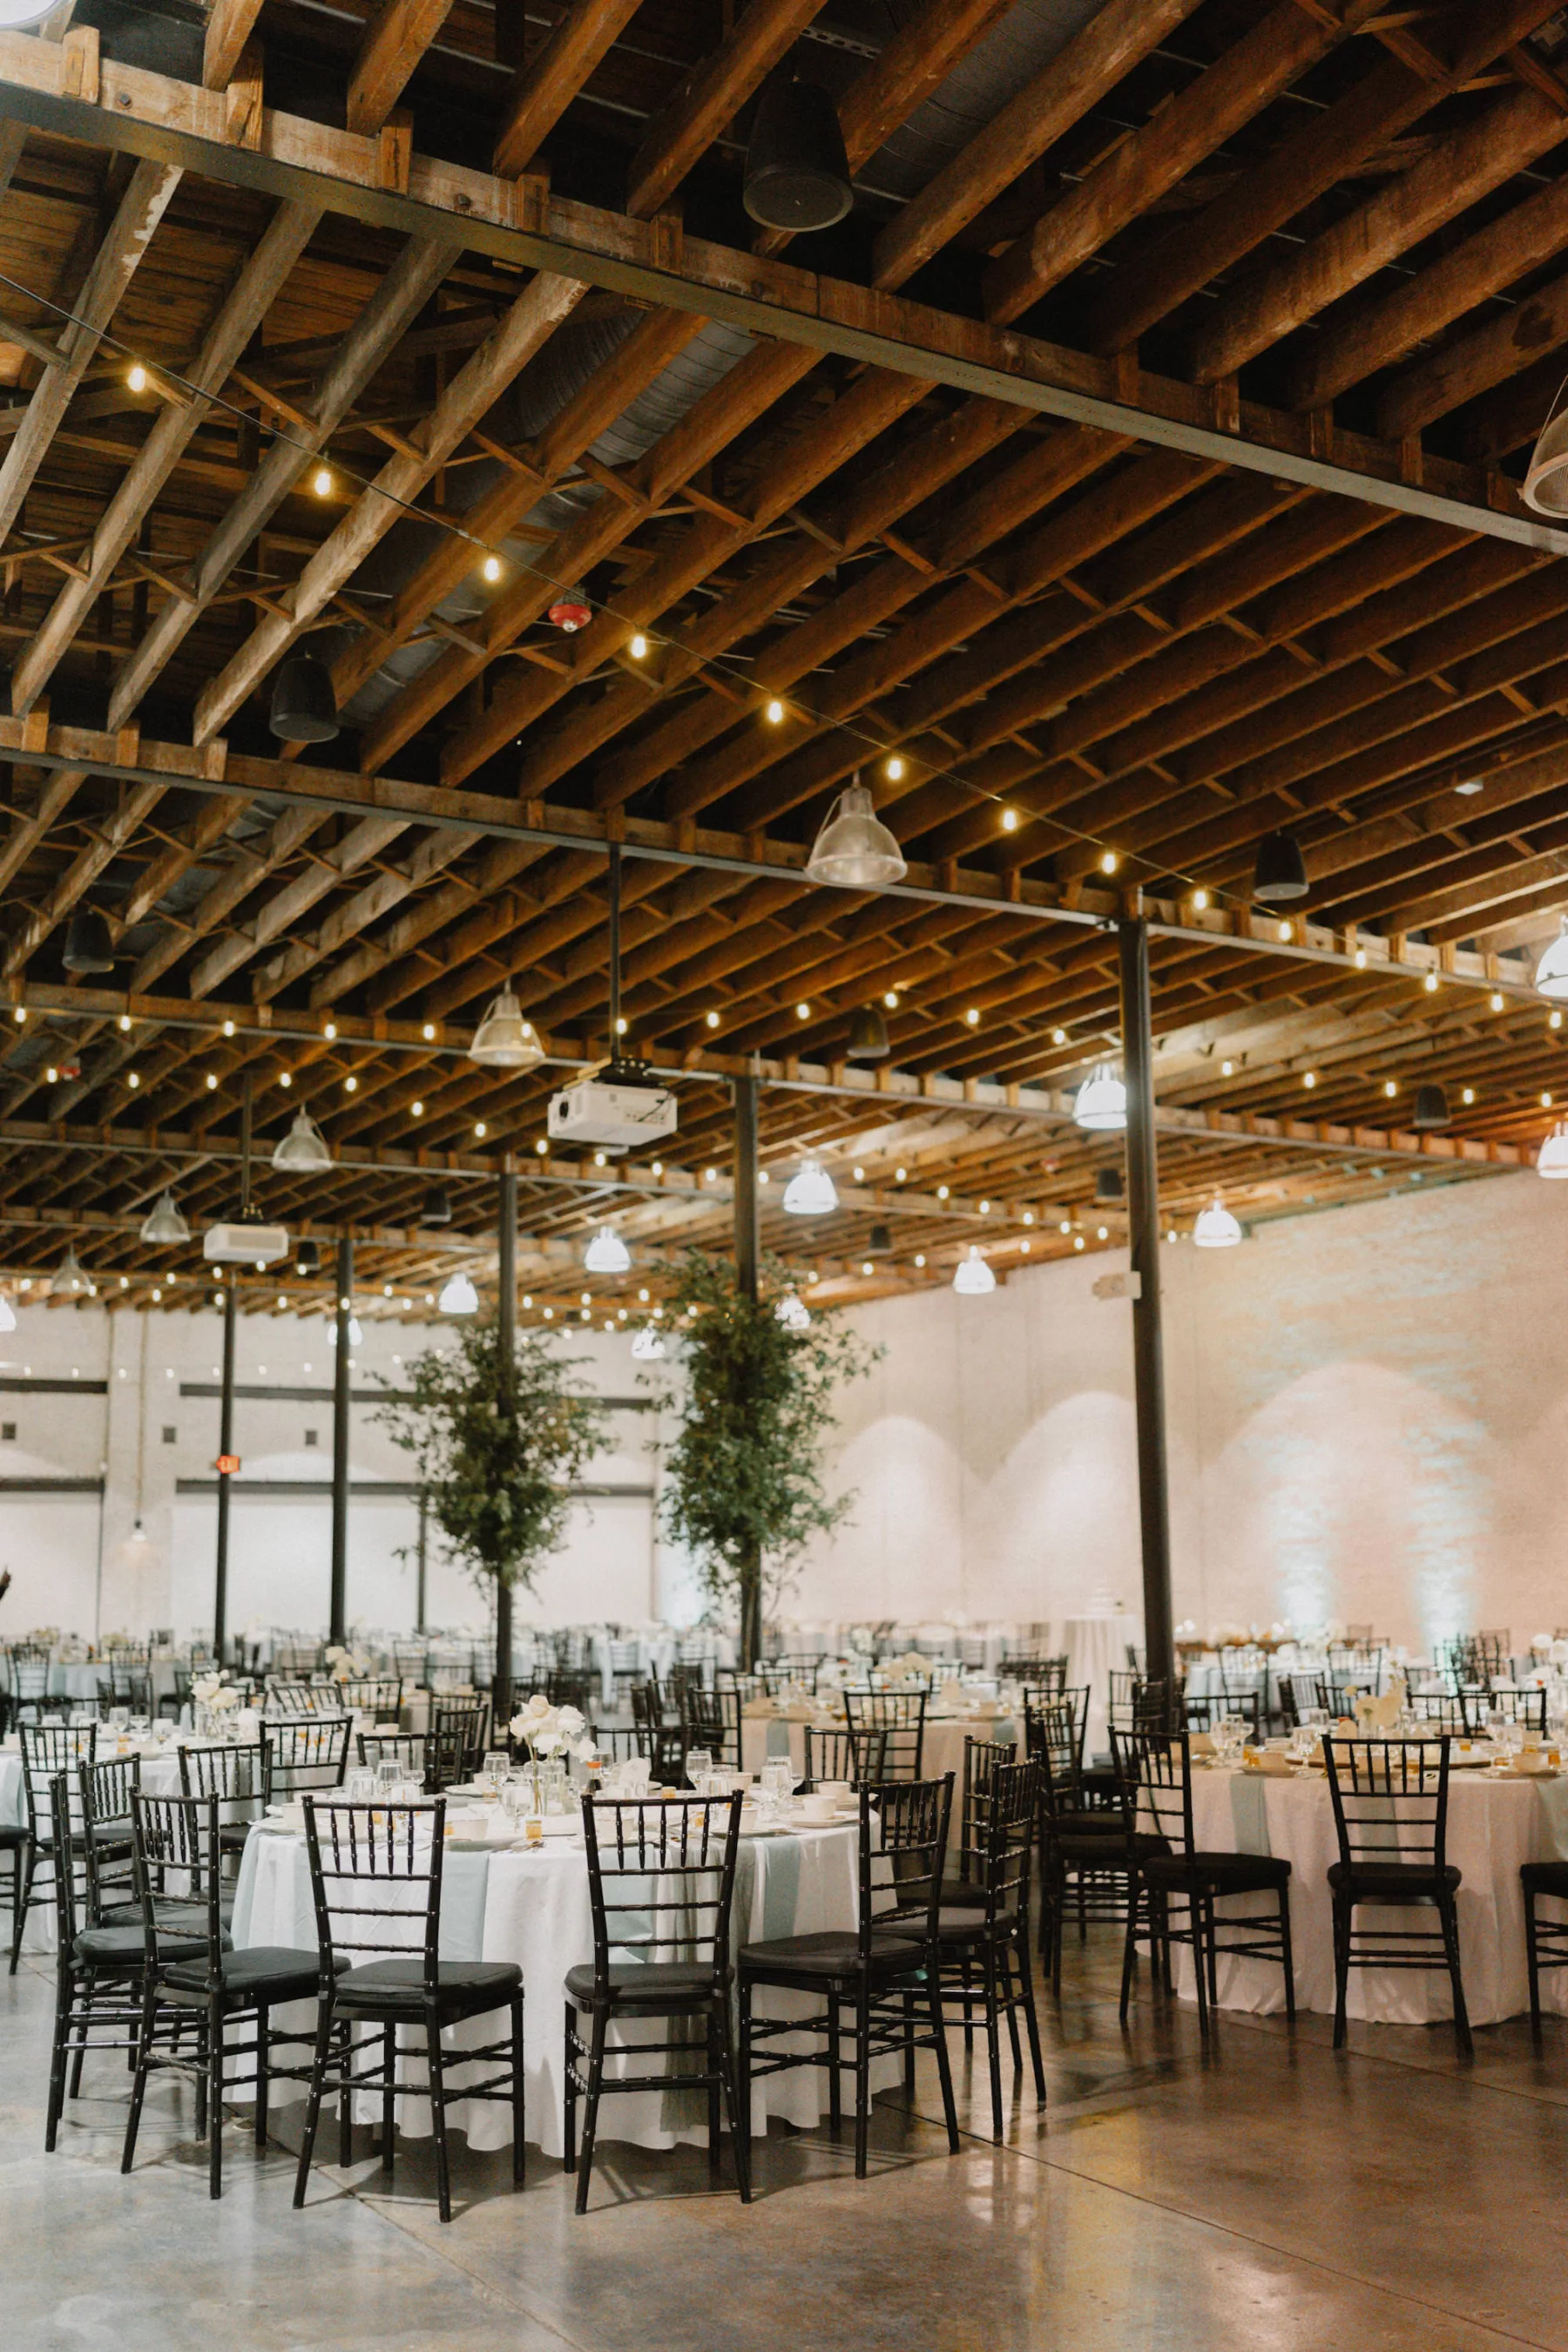 Modern Industrial White and Black Wedding Reception Decor Ideas | Tampa Bay Event Venue Haus 820